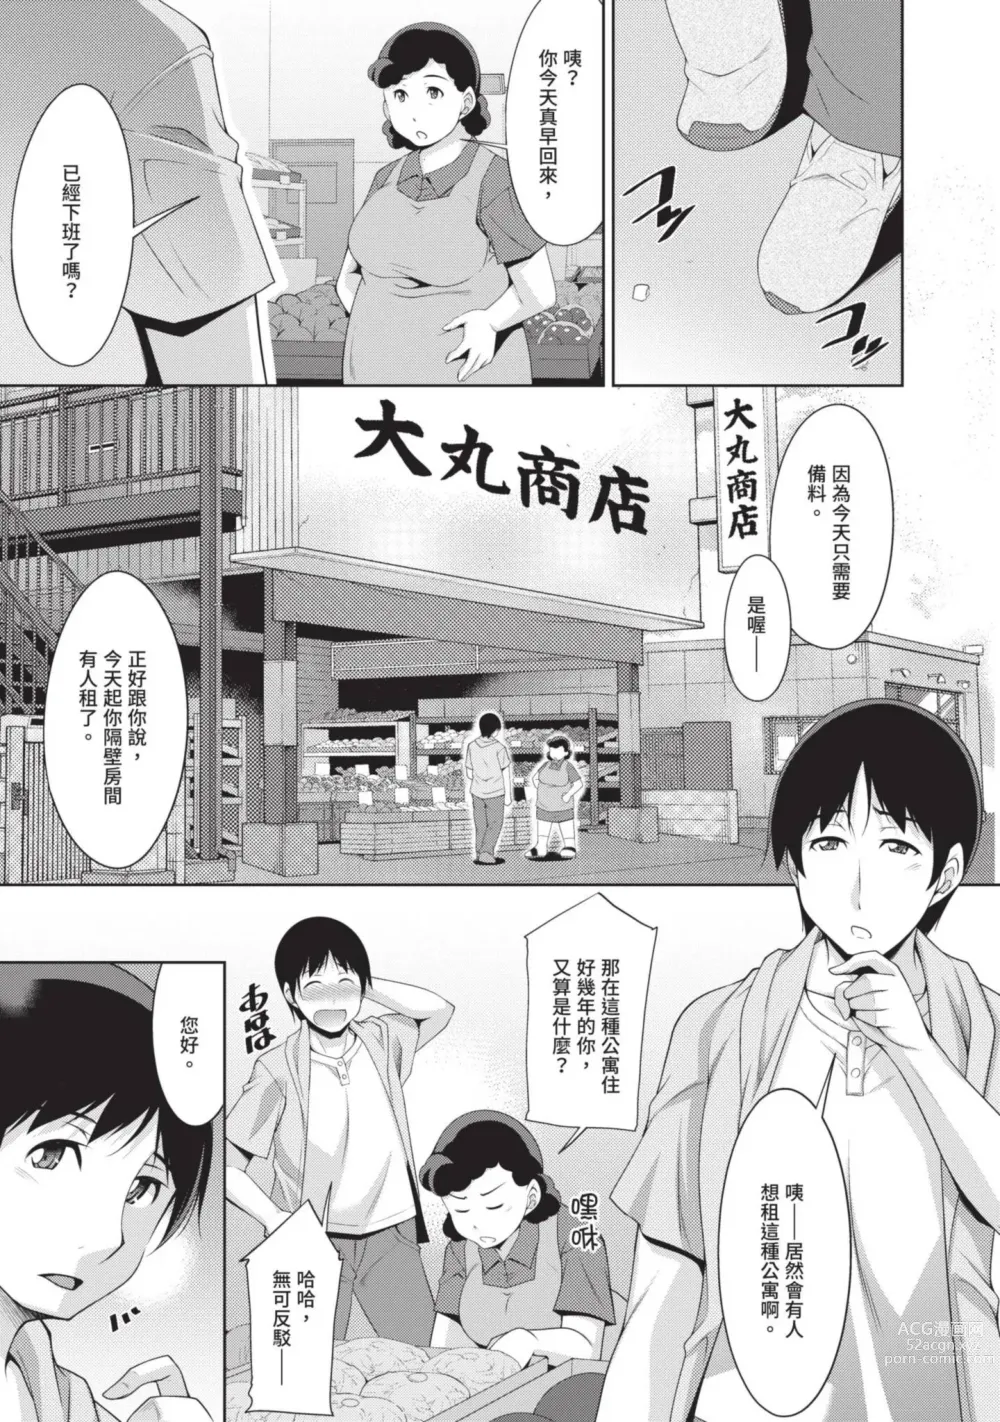 Page 7 of manga 眼鏡美女總是冷淡對應我